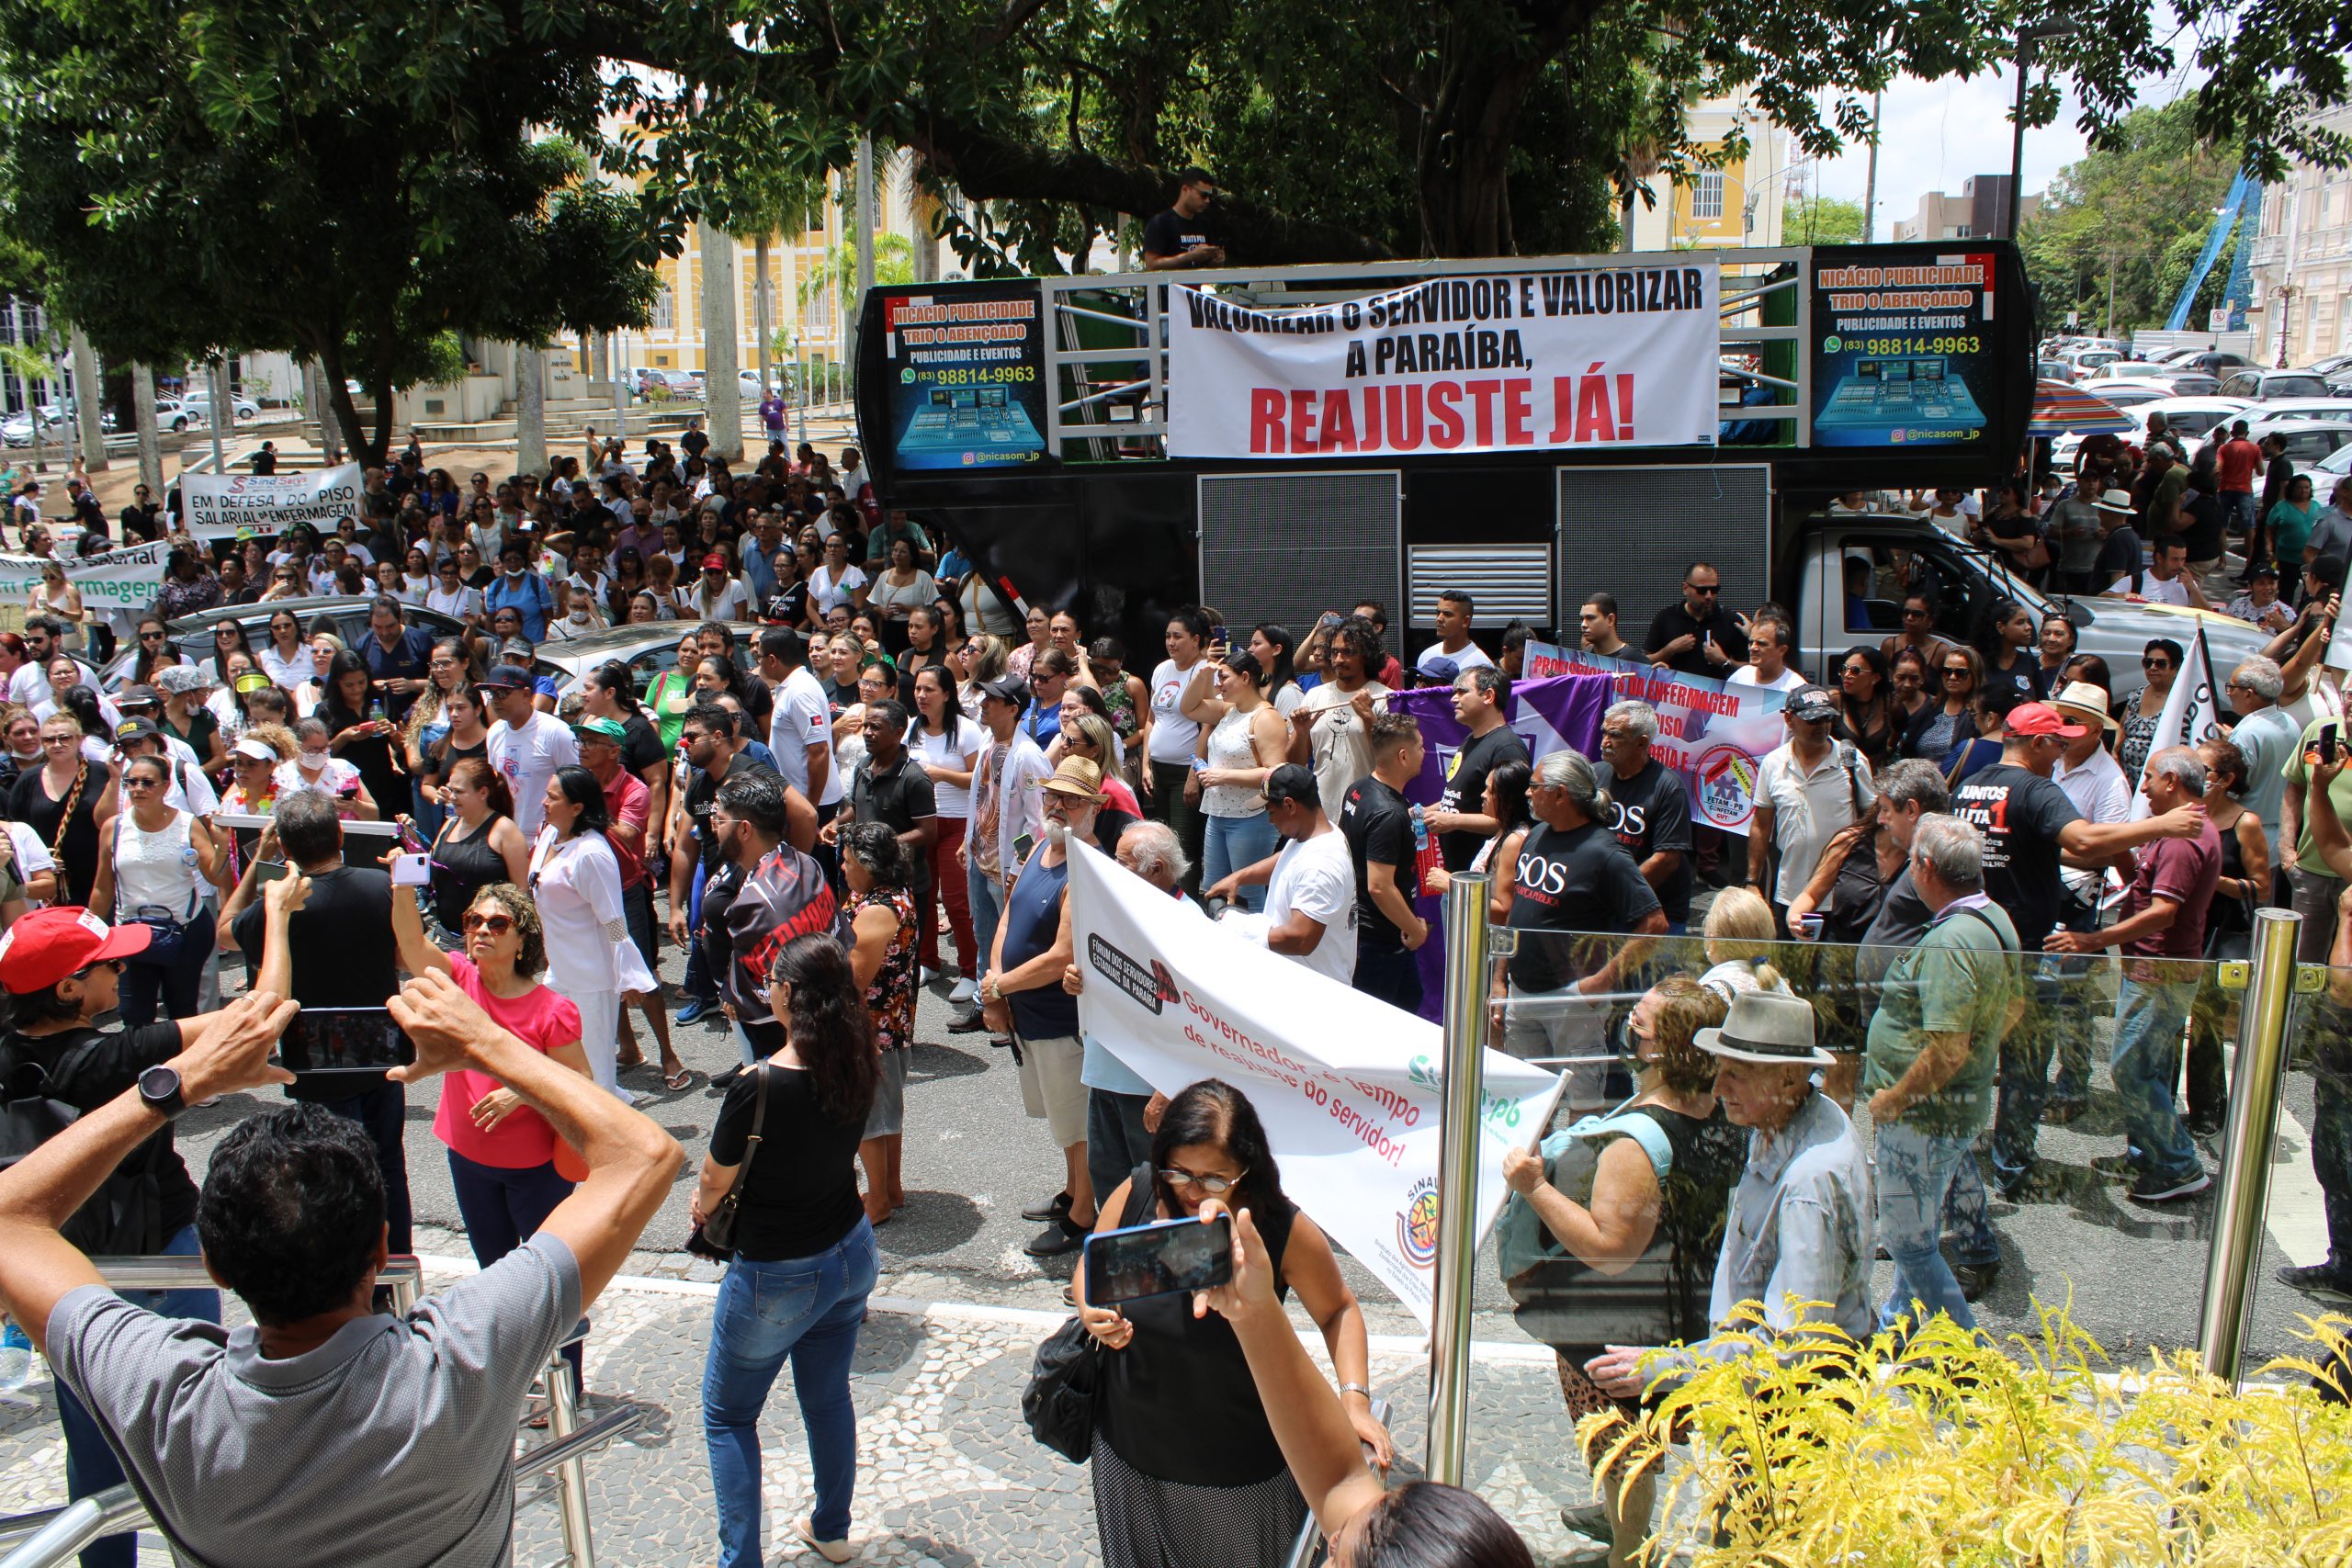 ADUEPB protesta junto com Fórum dos Servidores pelo reajuste salarial - ADUEPB